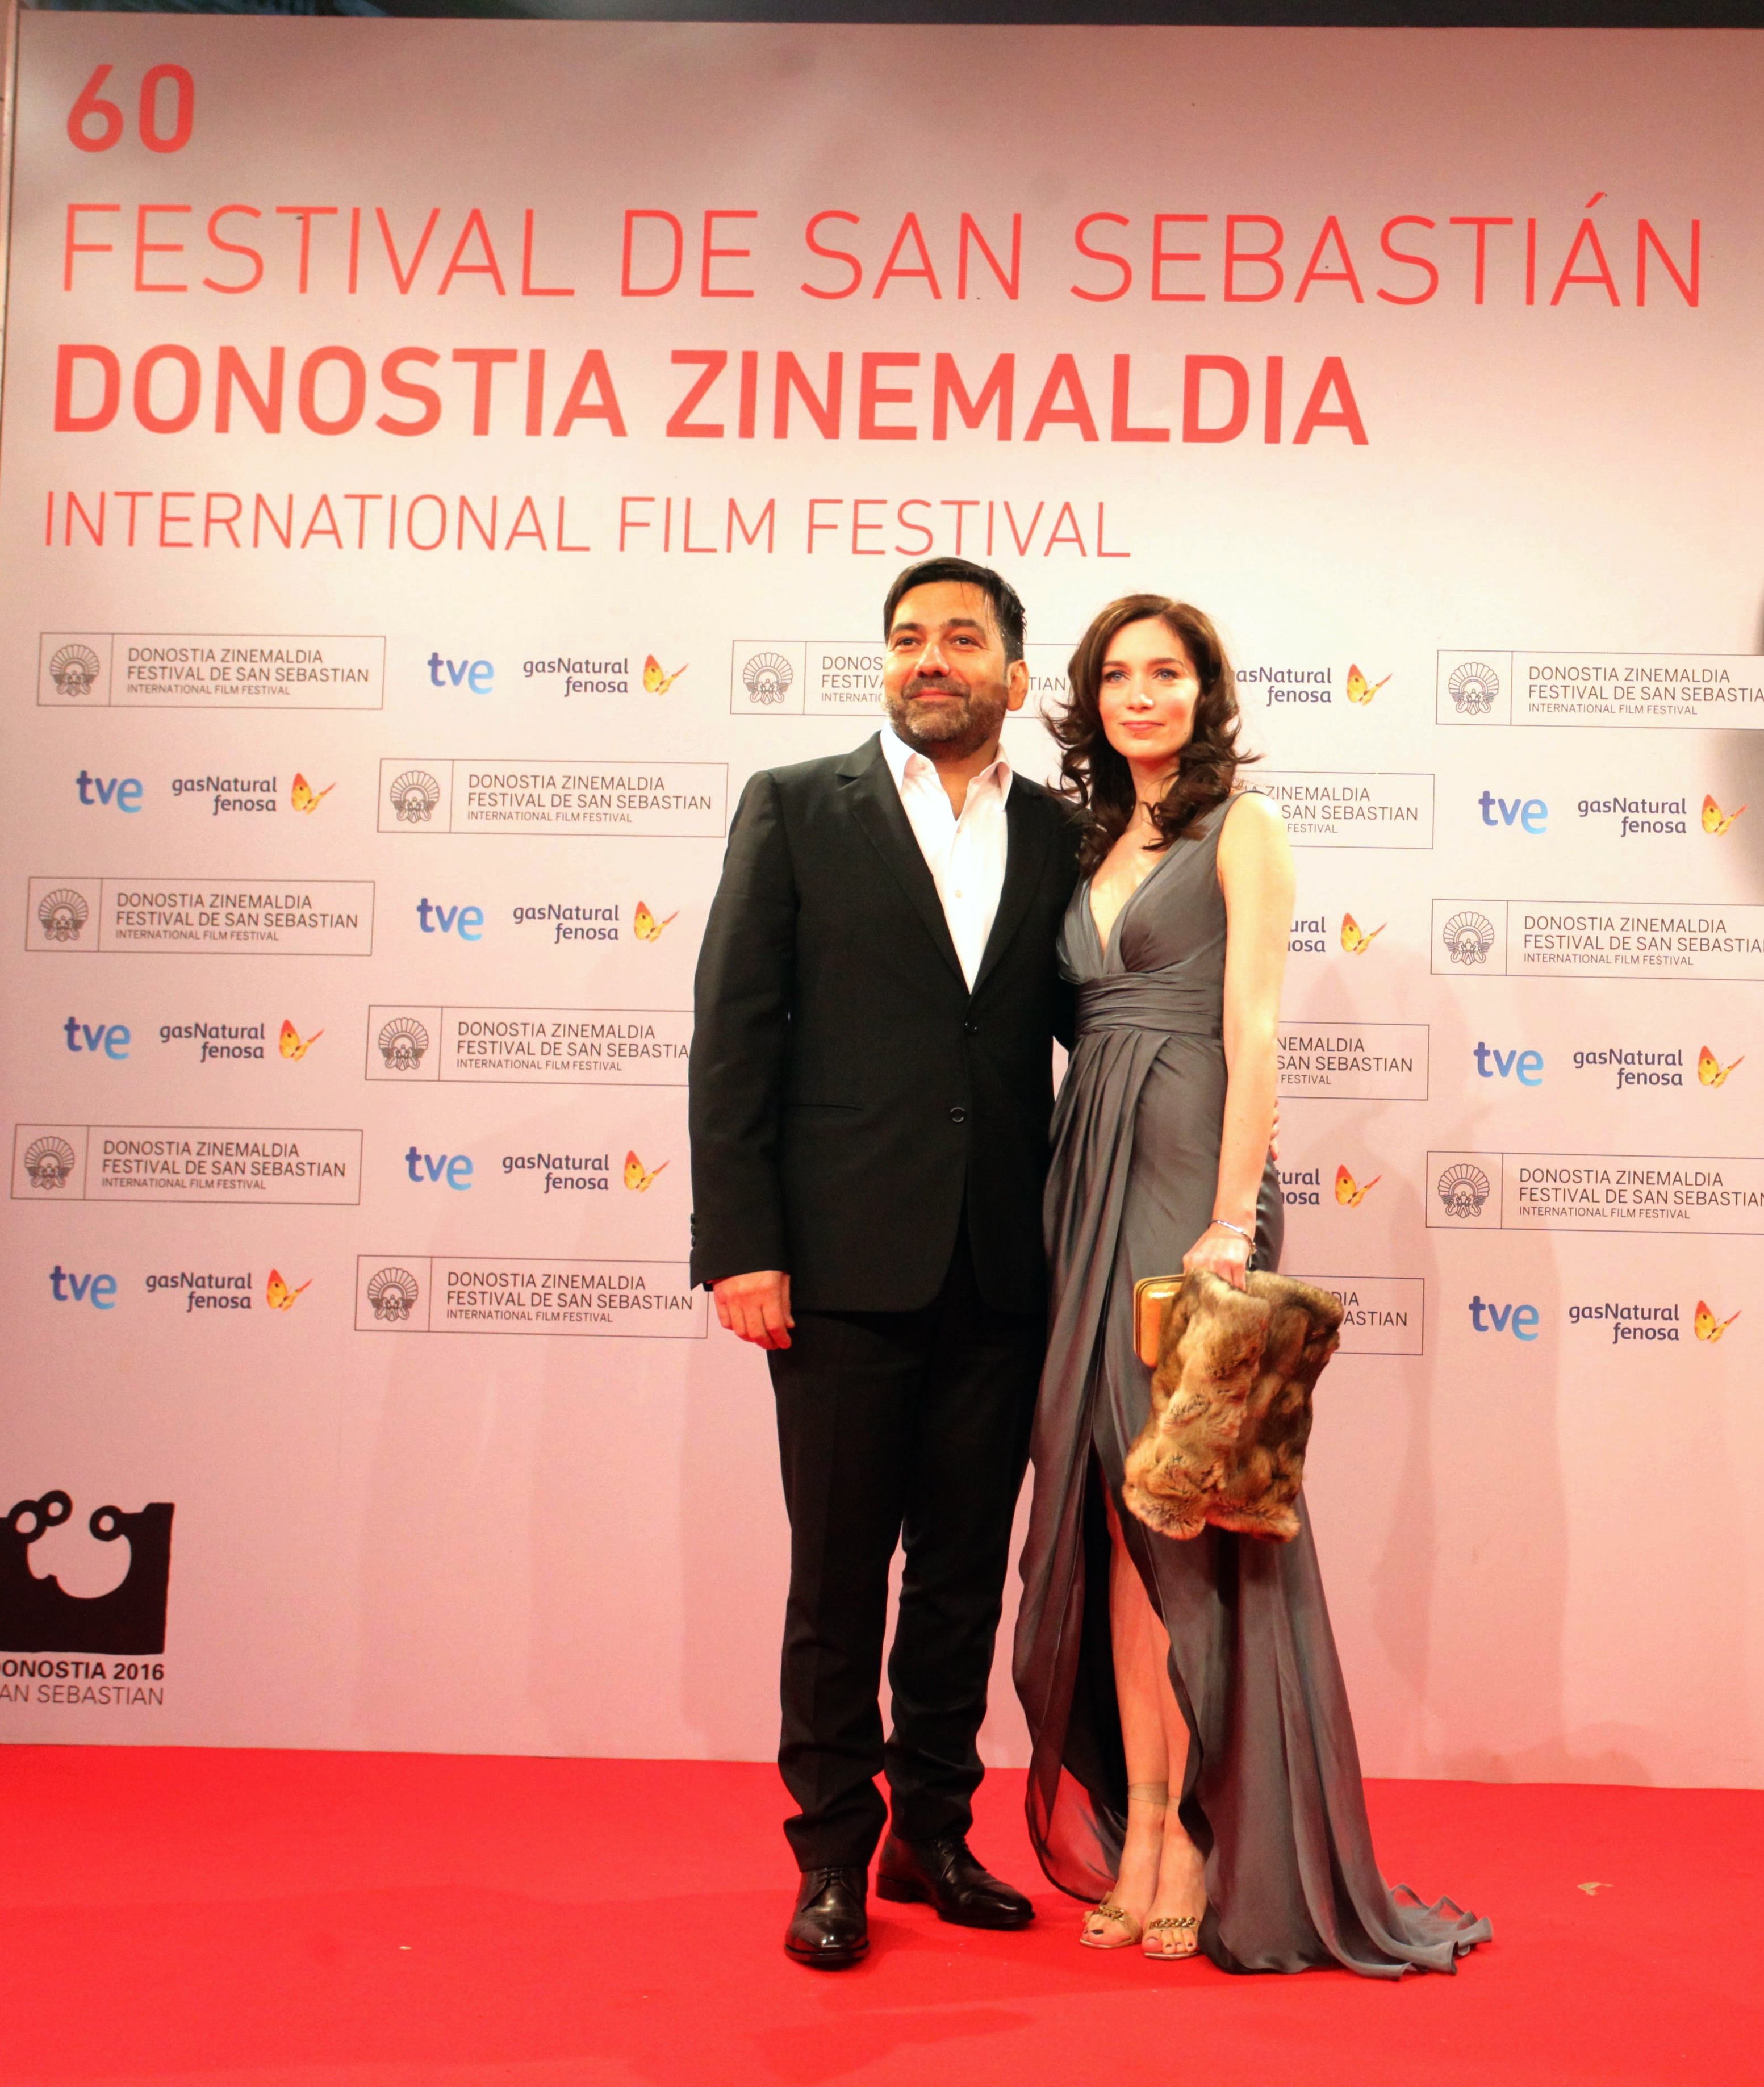 At closing ceremony of the San Sebastian Film Festival